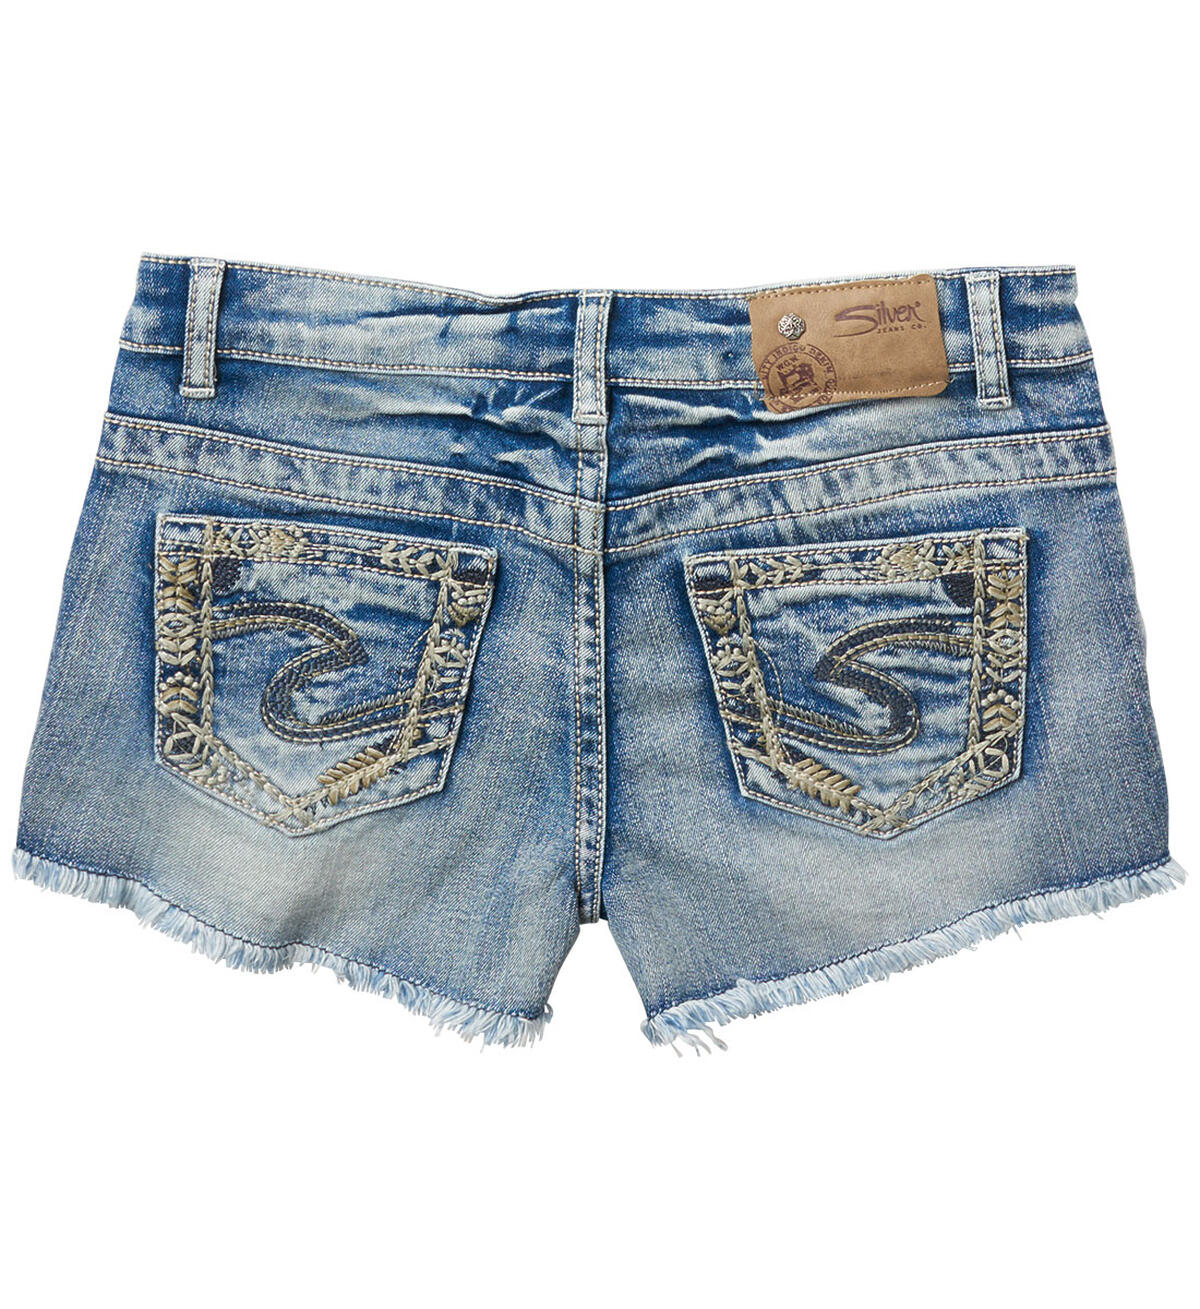 Lacy Cutoff Denim Shorts in Bleach Wash (7-16), , hi-res image number 1